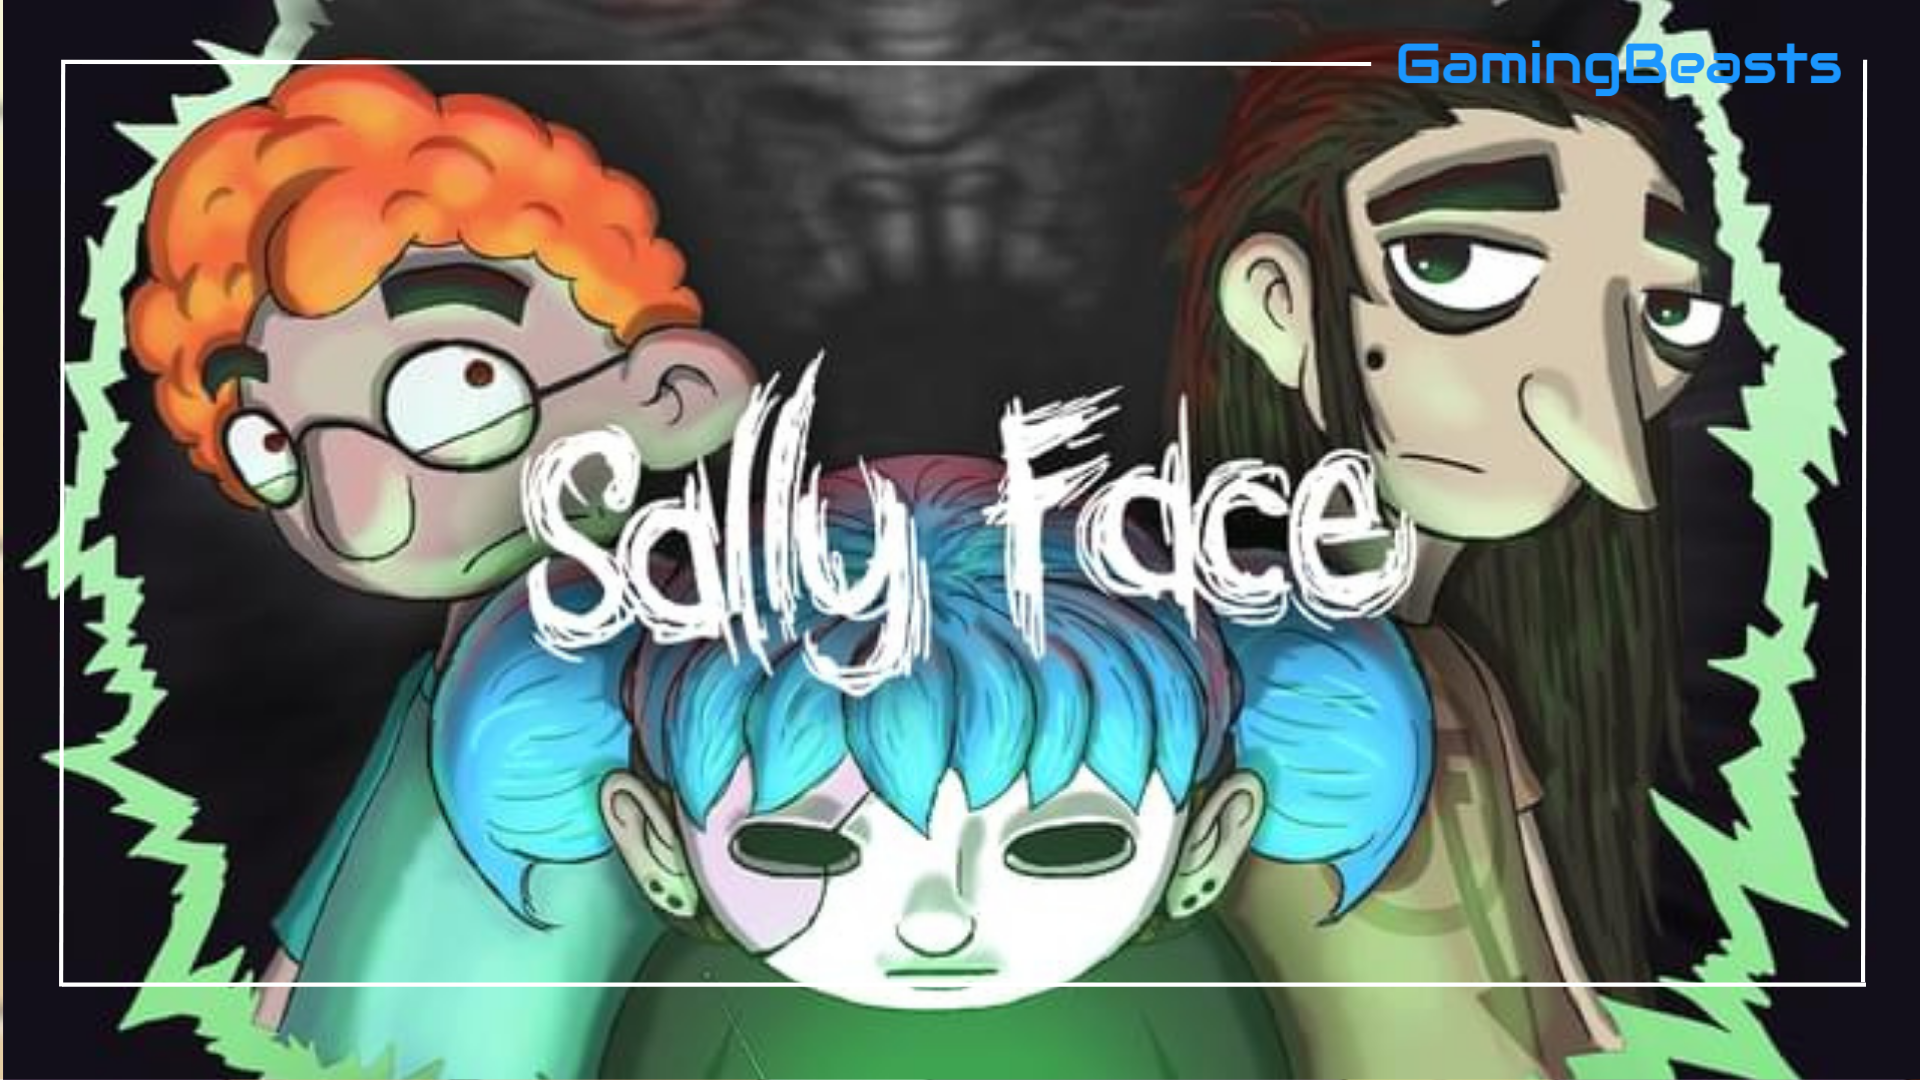 Sally face singular